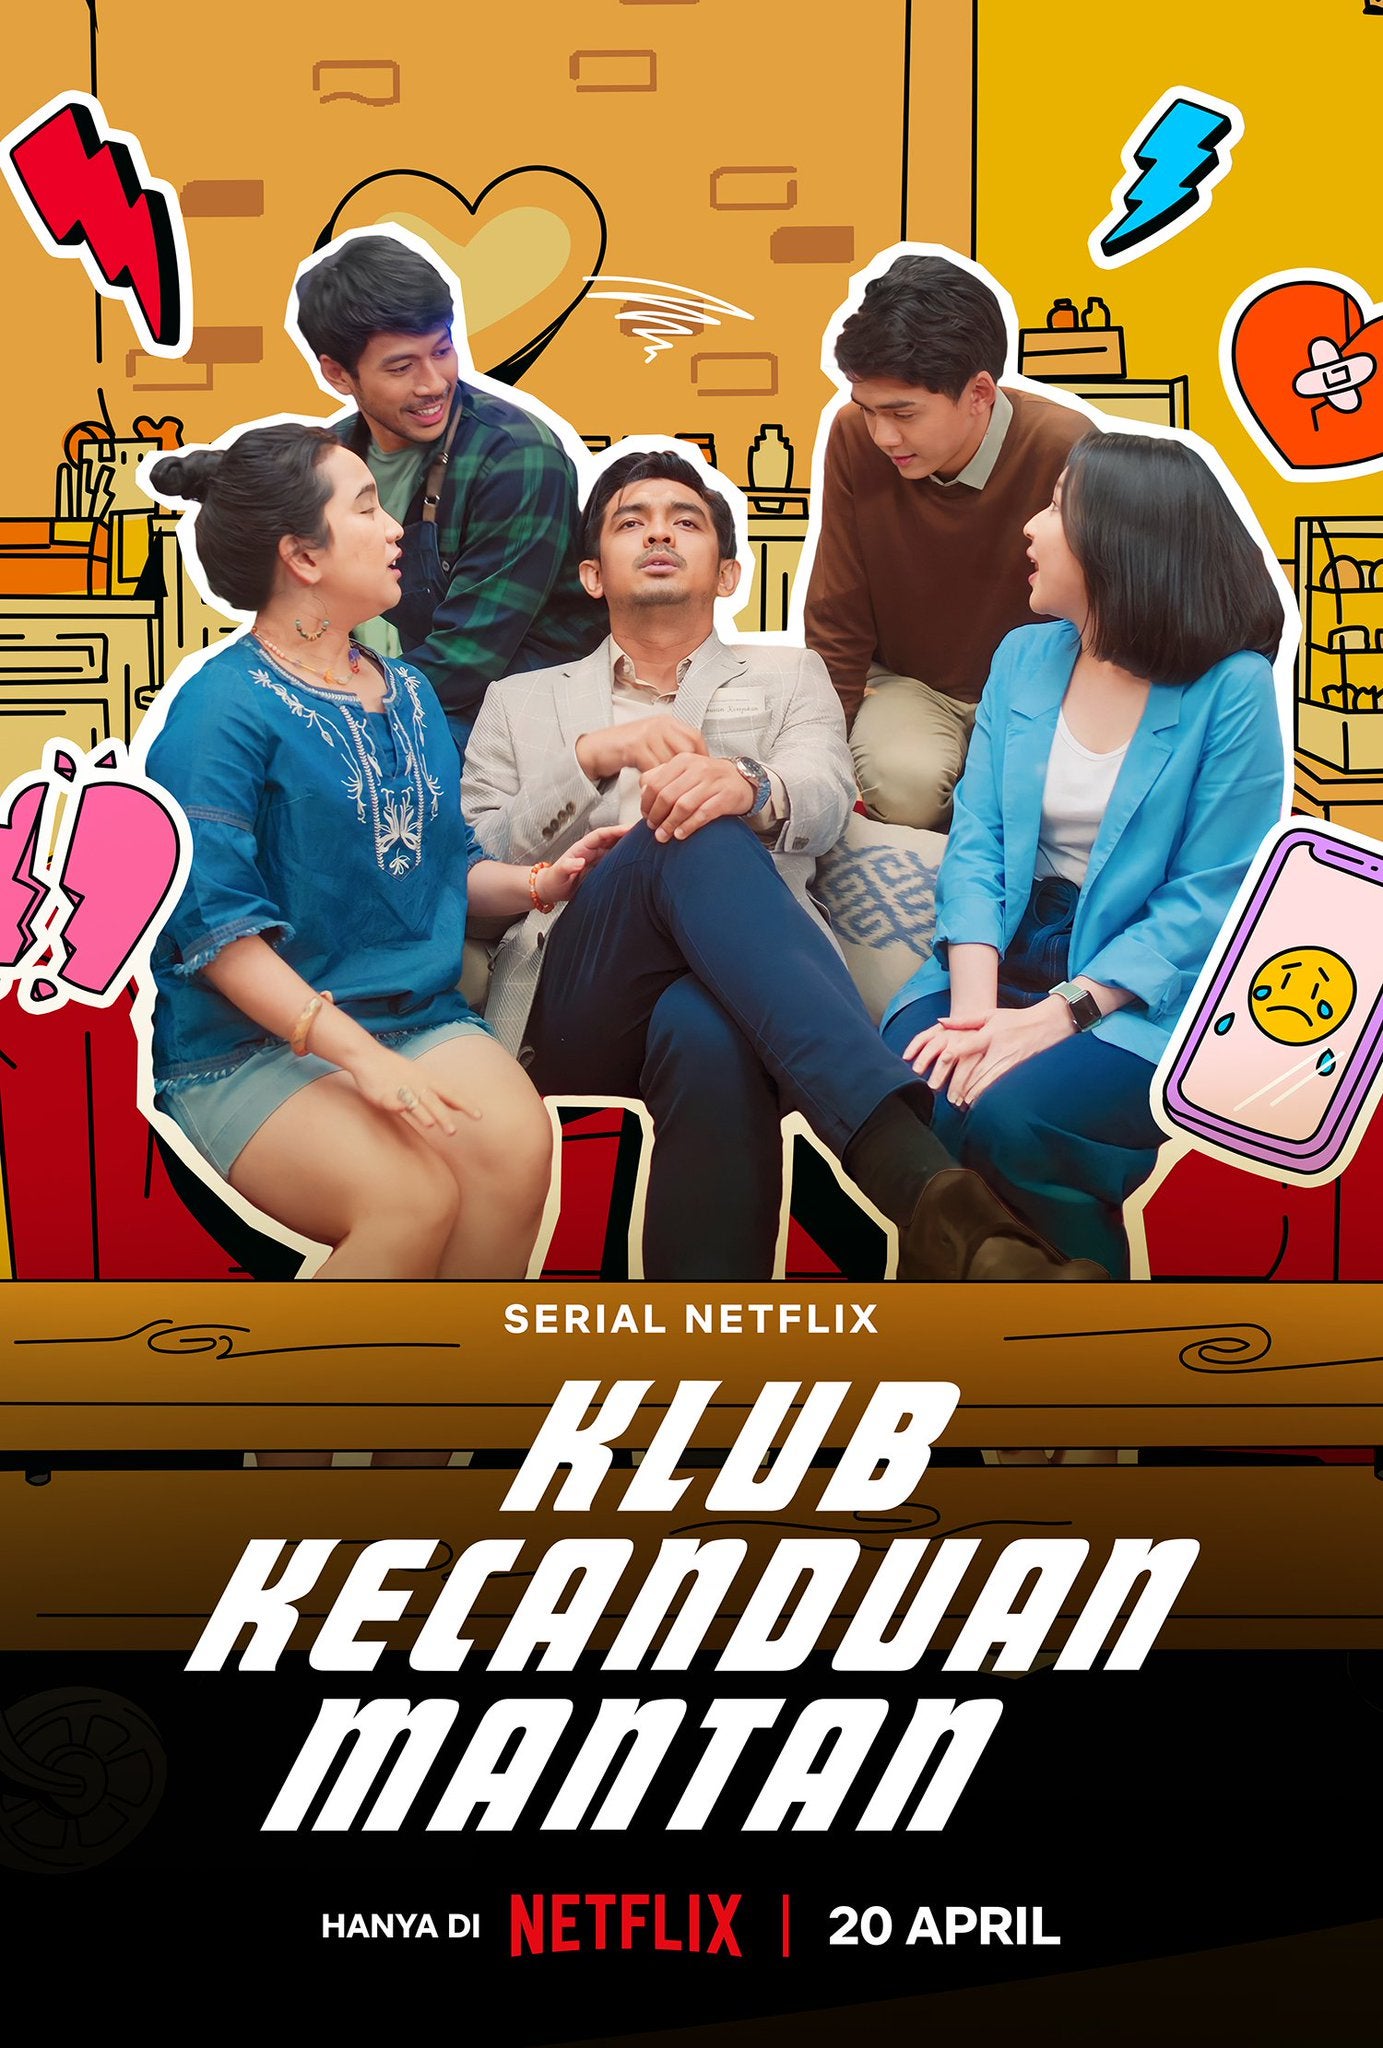 TV ratings for Ex-Addicts Club (Klub Kecanduan Mantan) in Philippines. Netflix TV series